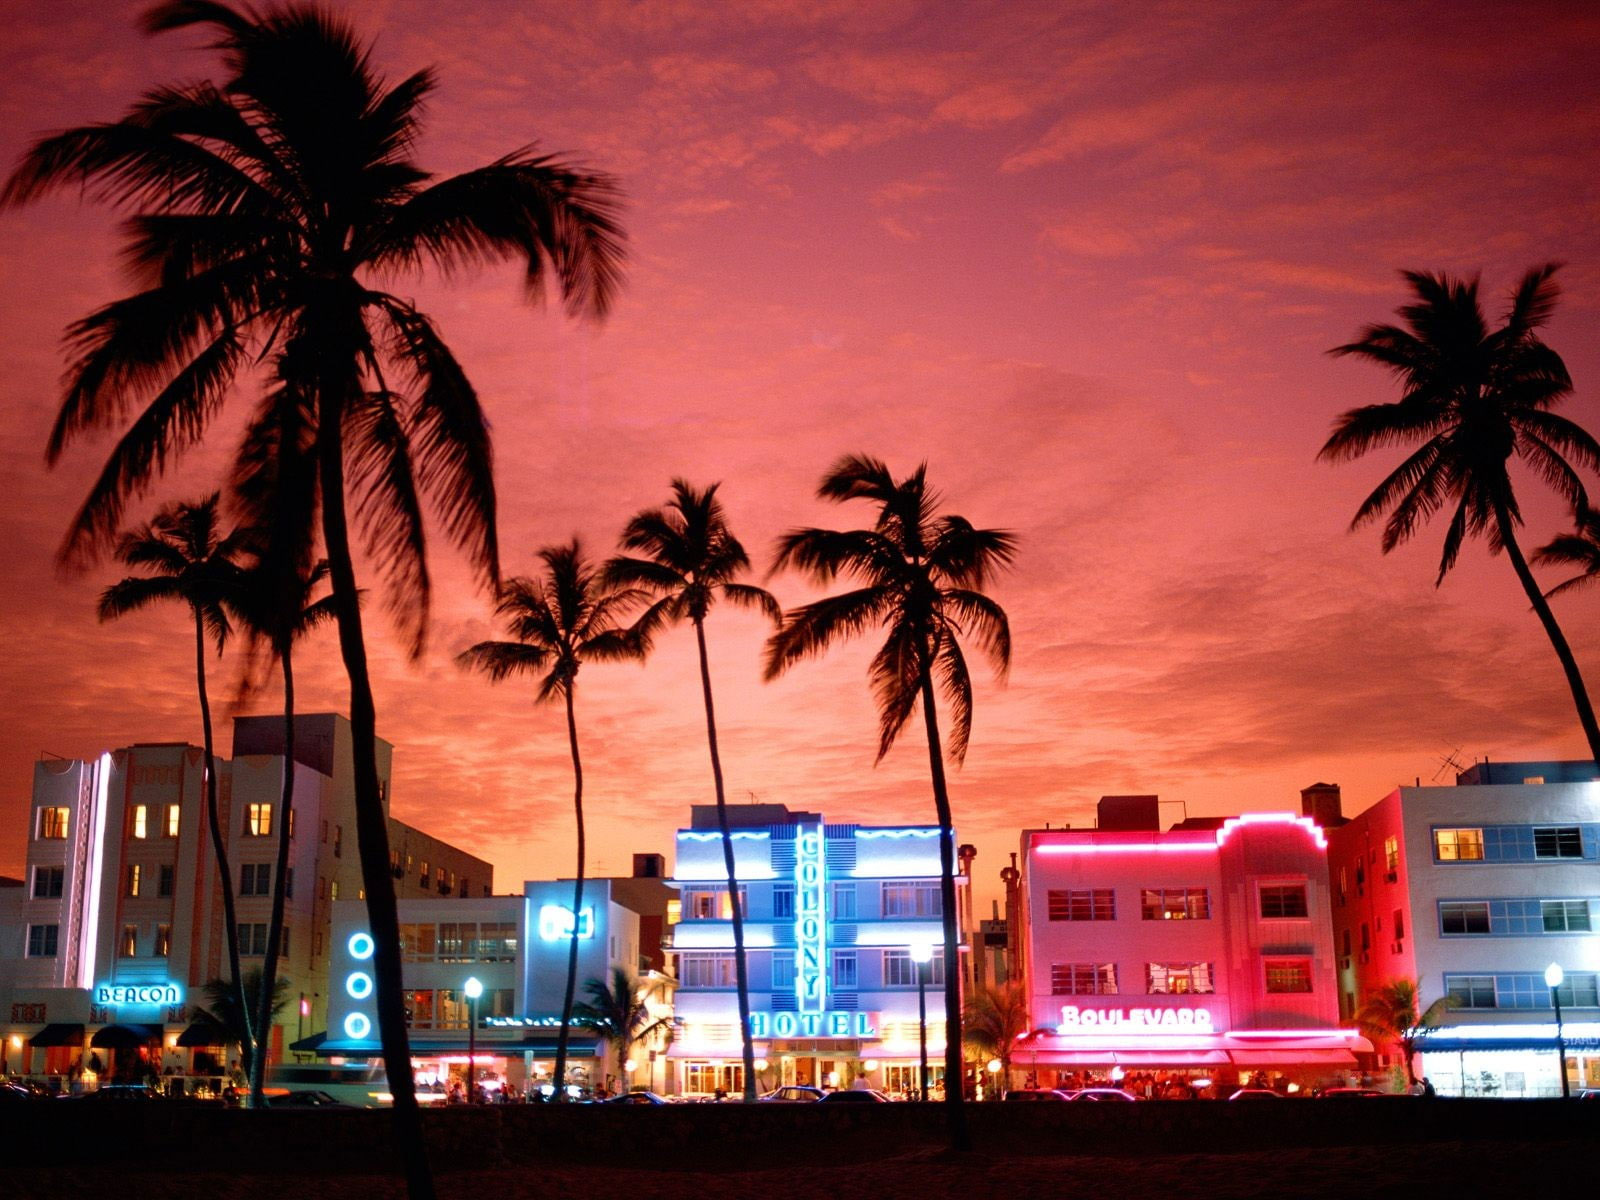 Wallpaper Miami, Street, Neon Lights, Palm Trees, Urban - Wallpaperforu